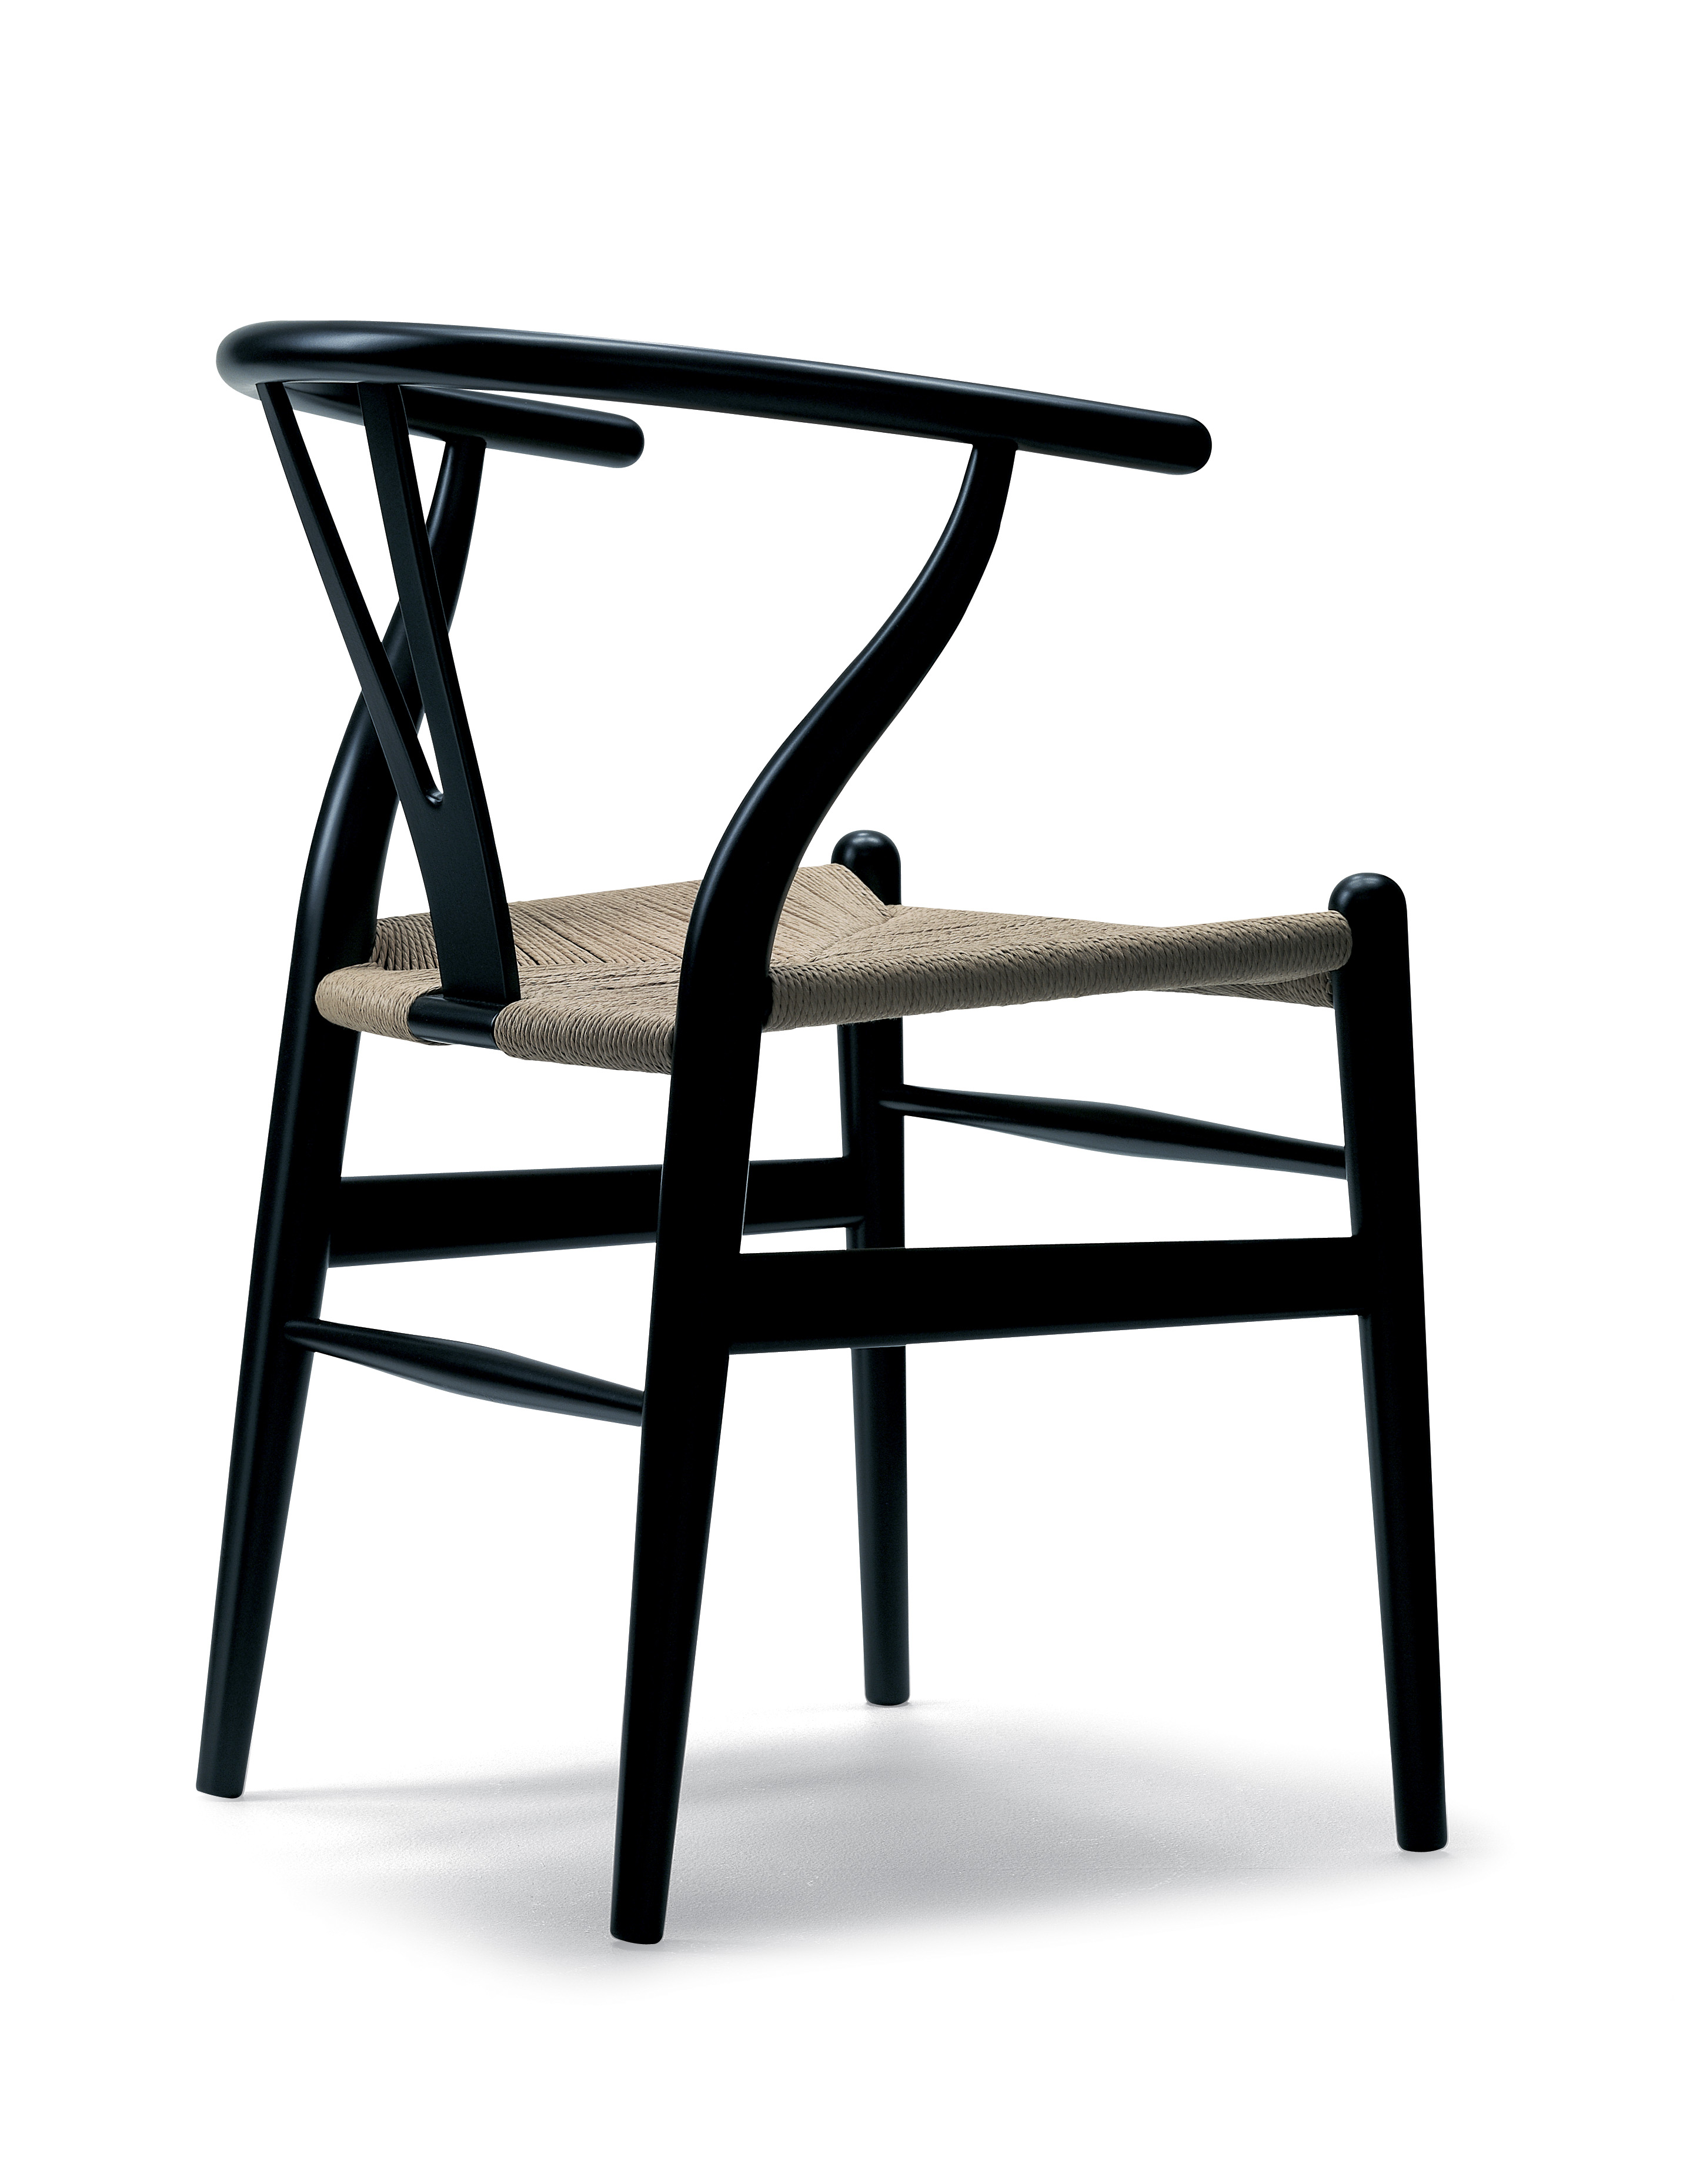 Стул ch. Ханс Вегнер Wishbone Chair. Ханс Дж. Вегнер (кресло Wishbone). Carl Hansen Wishbone. Стул Wishbone Chair, дизайн Ханса Вегнера.